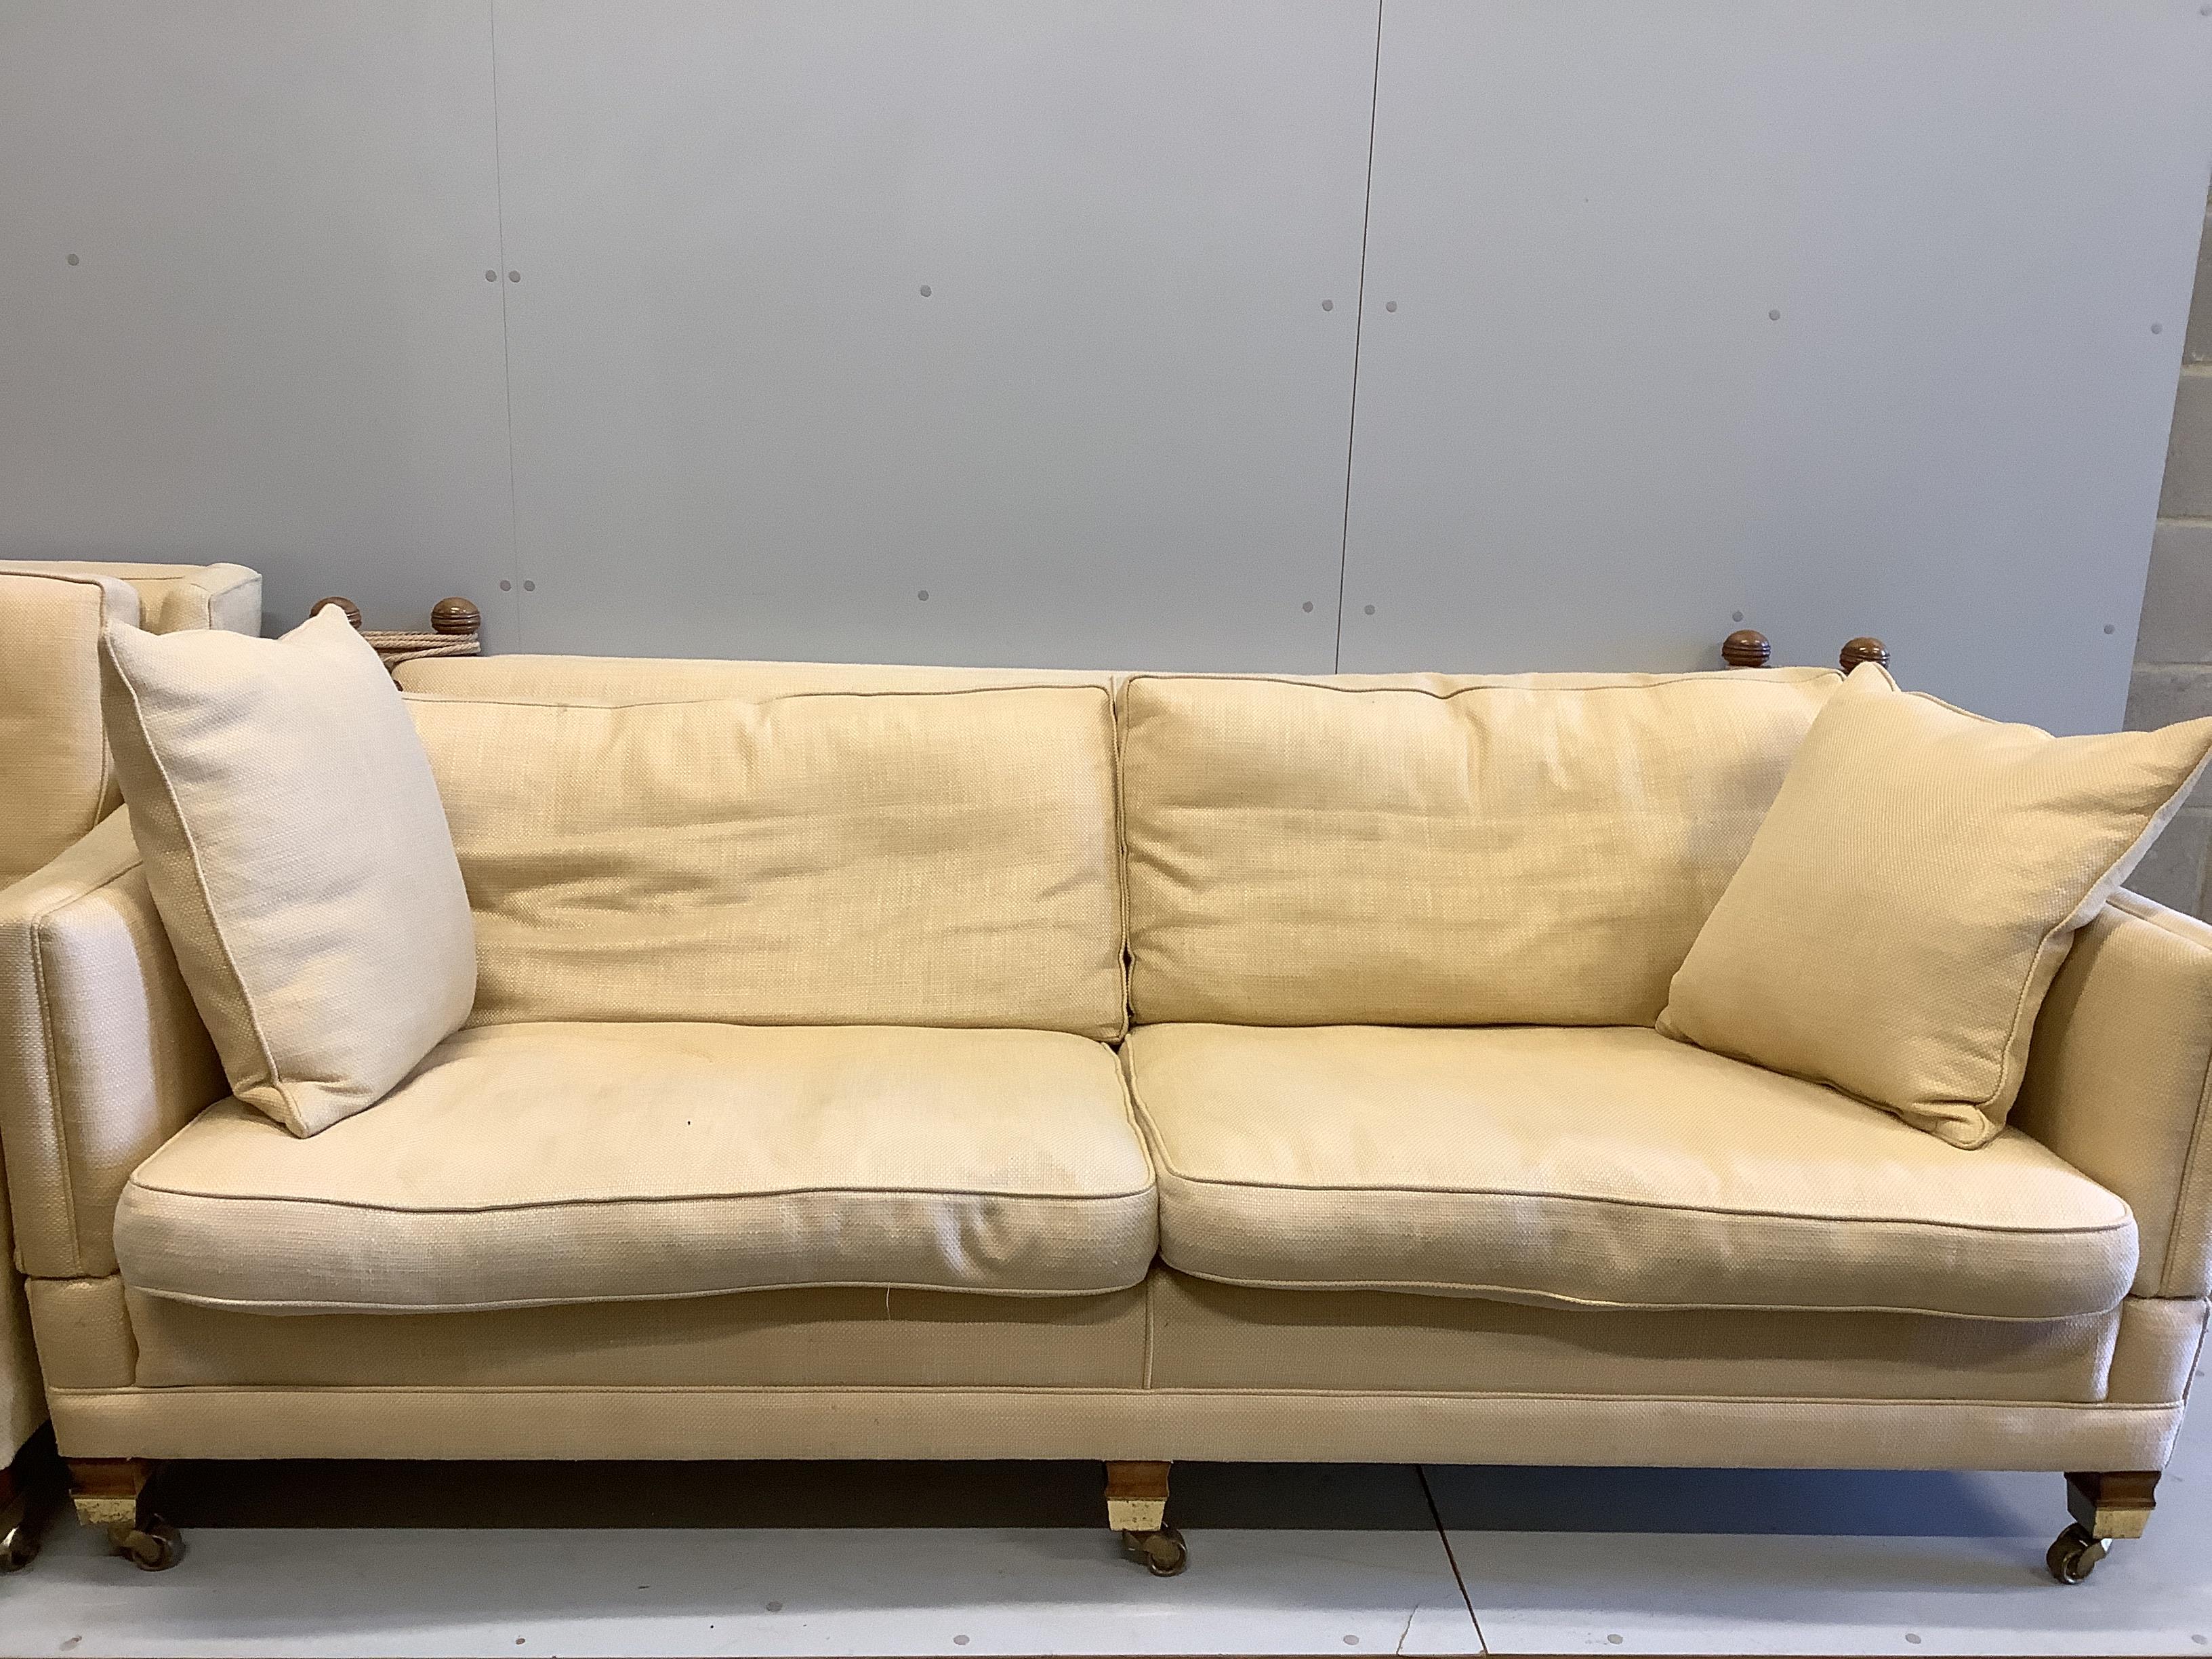 A Duresta style Knoll settee, width 222cm, depth 110cm, height 88cm and matching armchair                                                                                                                                   